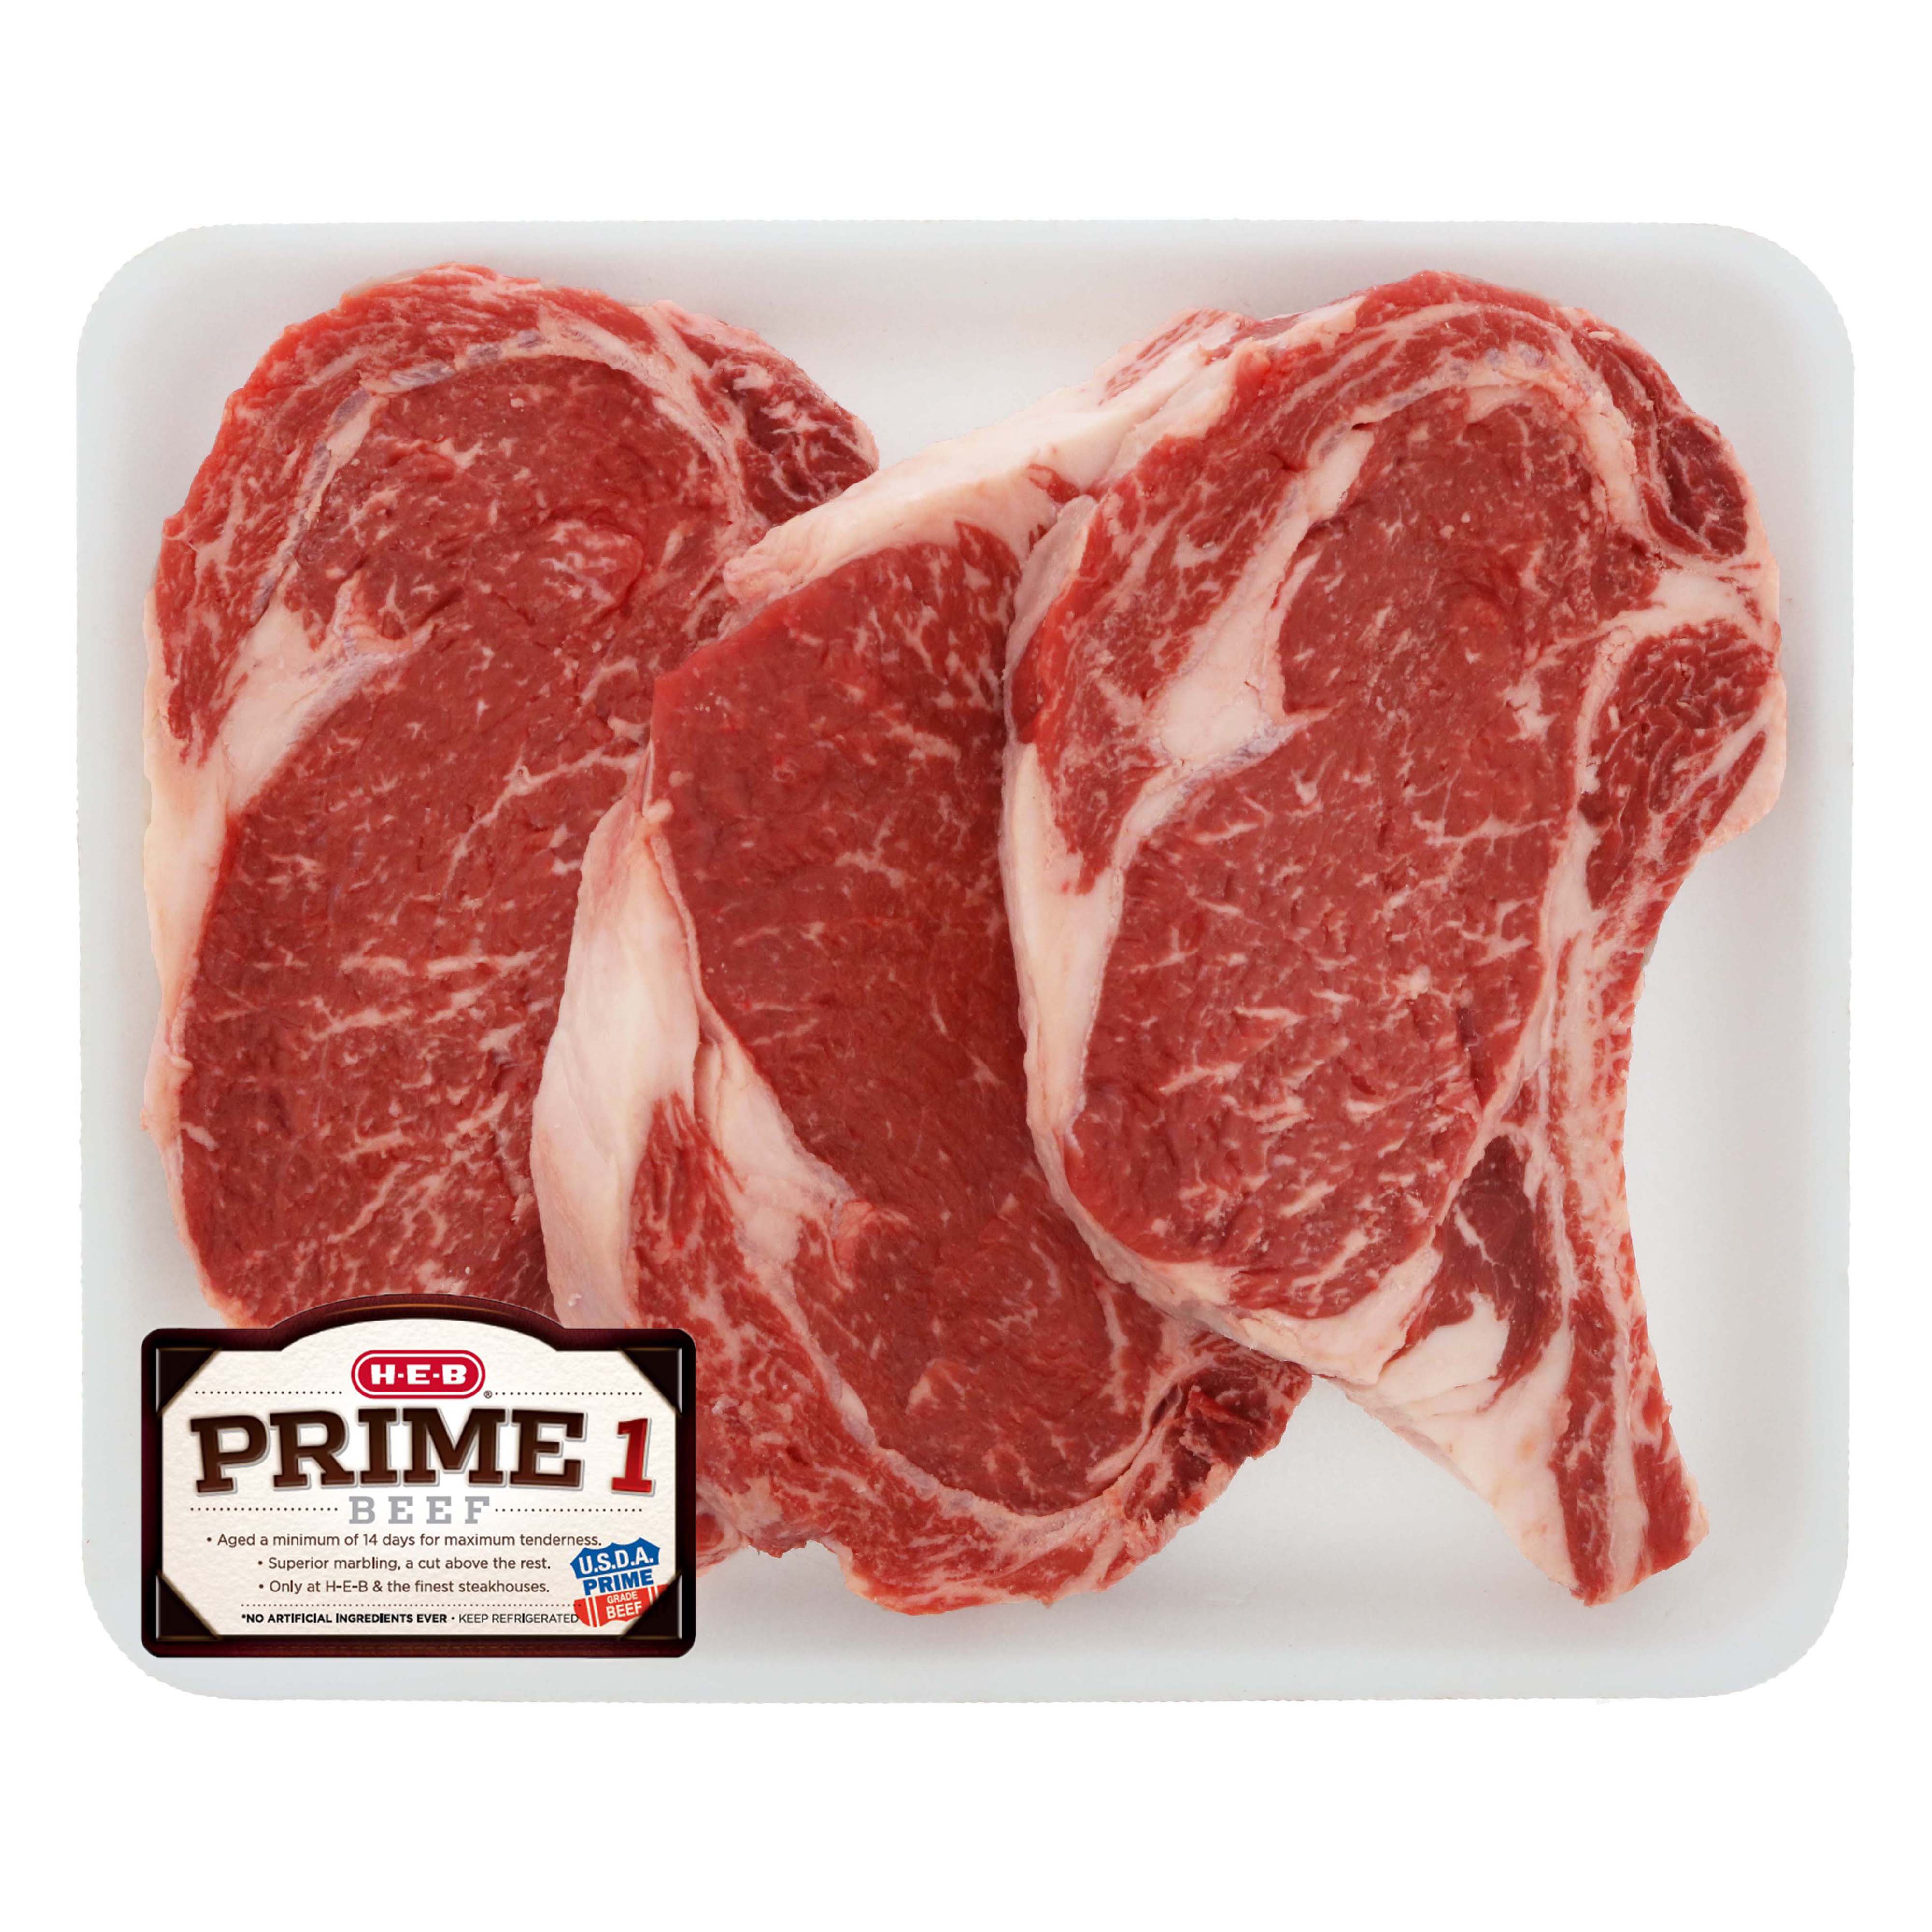 H E B Prime 1 Beef Ribeye Steak Bone In Value Pack Usda Prime 3 4 Steaks Shop Beef At H E B